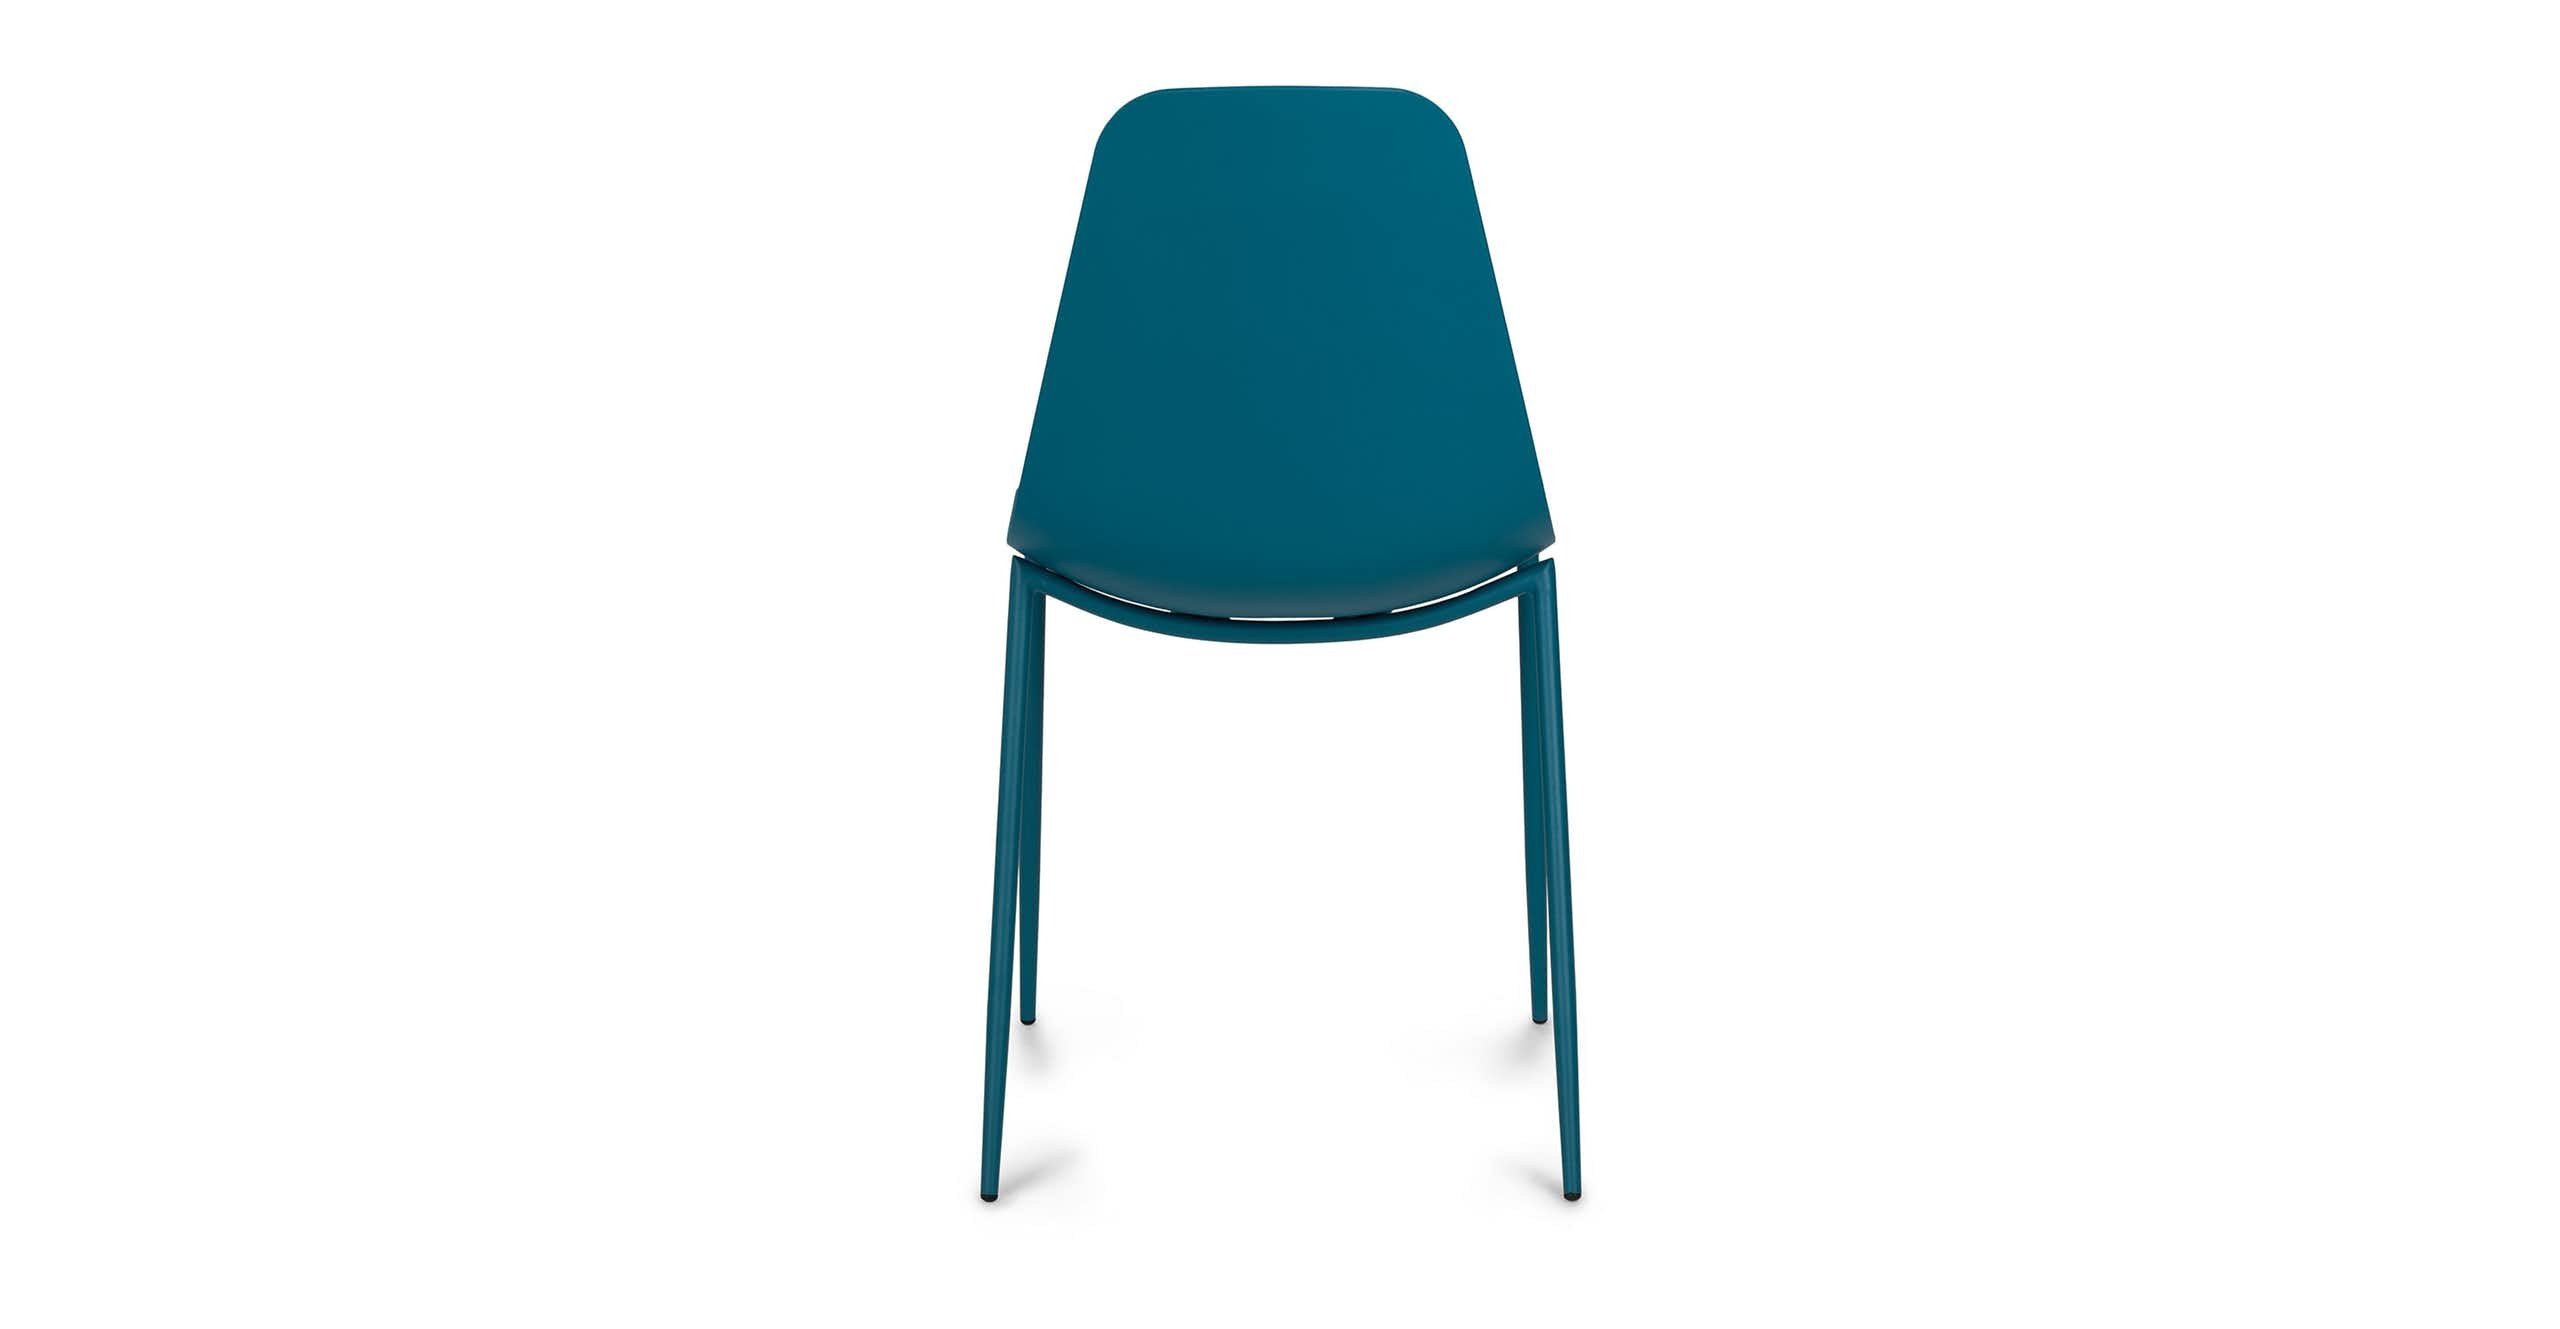 SVELTI DEEP COVE TEAL CHAIR - Single Chair - Image 3